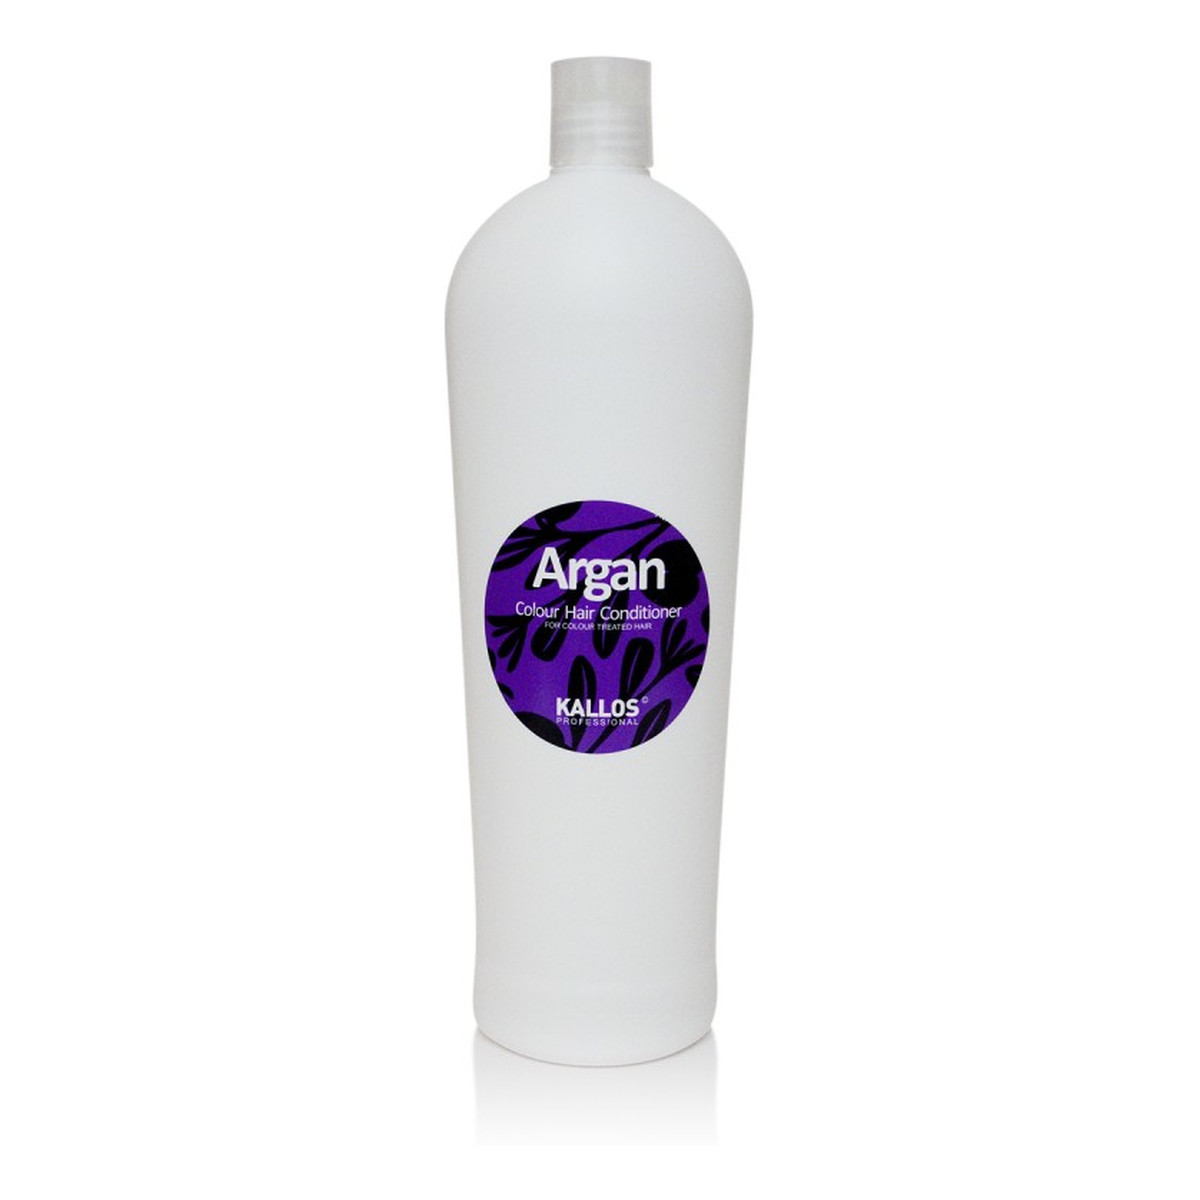 Kallos Argan colour hair conditioner arganowa odżywka do włosów farbowanych 1000ml